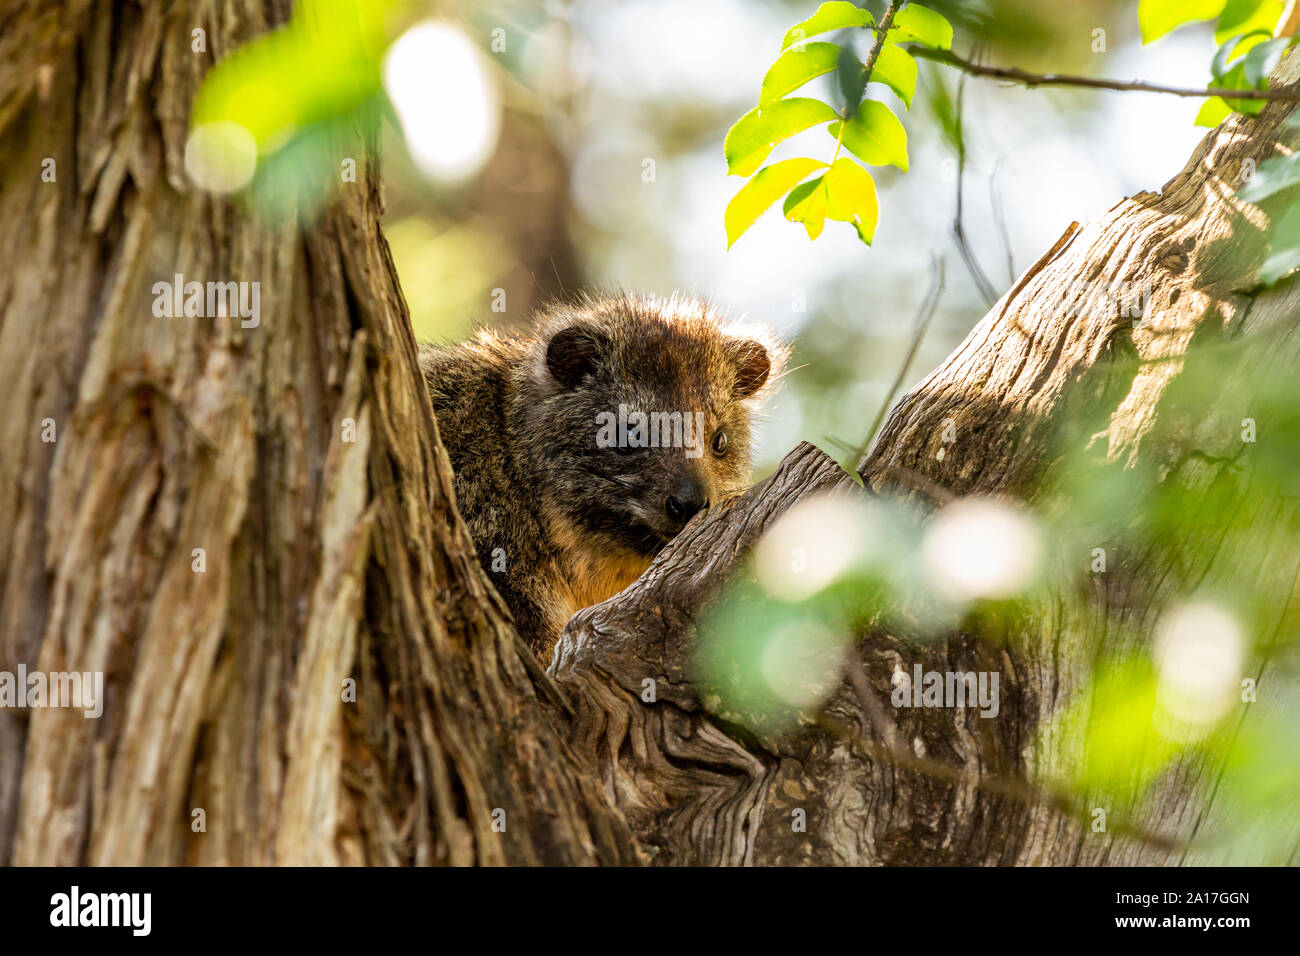 Tree Hyrax in daytime sitting in tree, in Nanyuki, Laikipia county, Kenya. Stock Photo